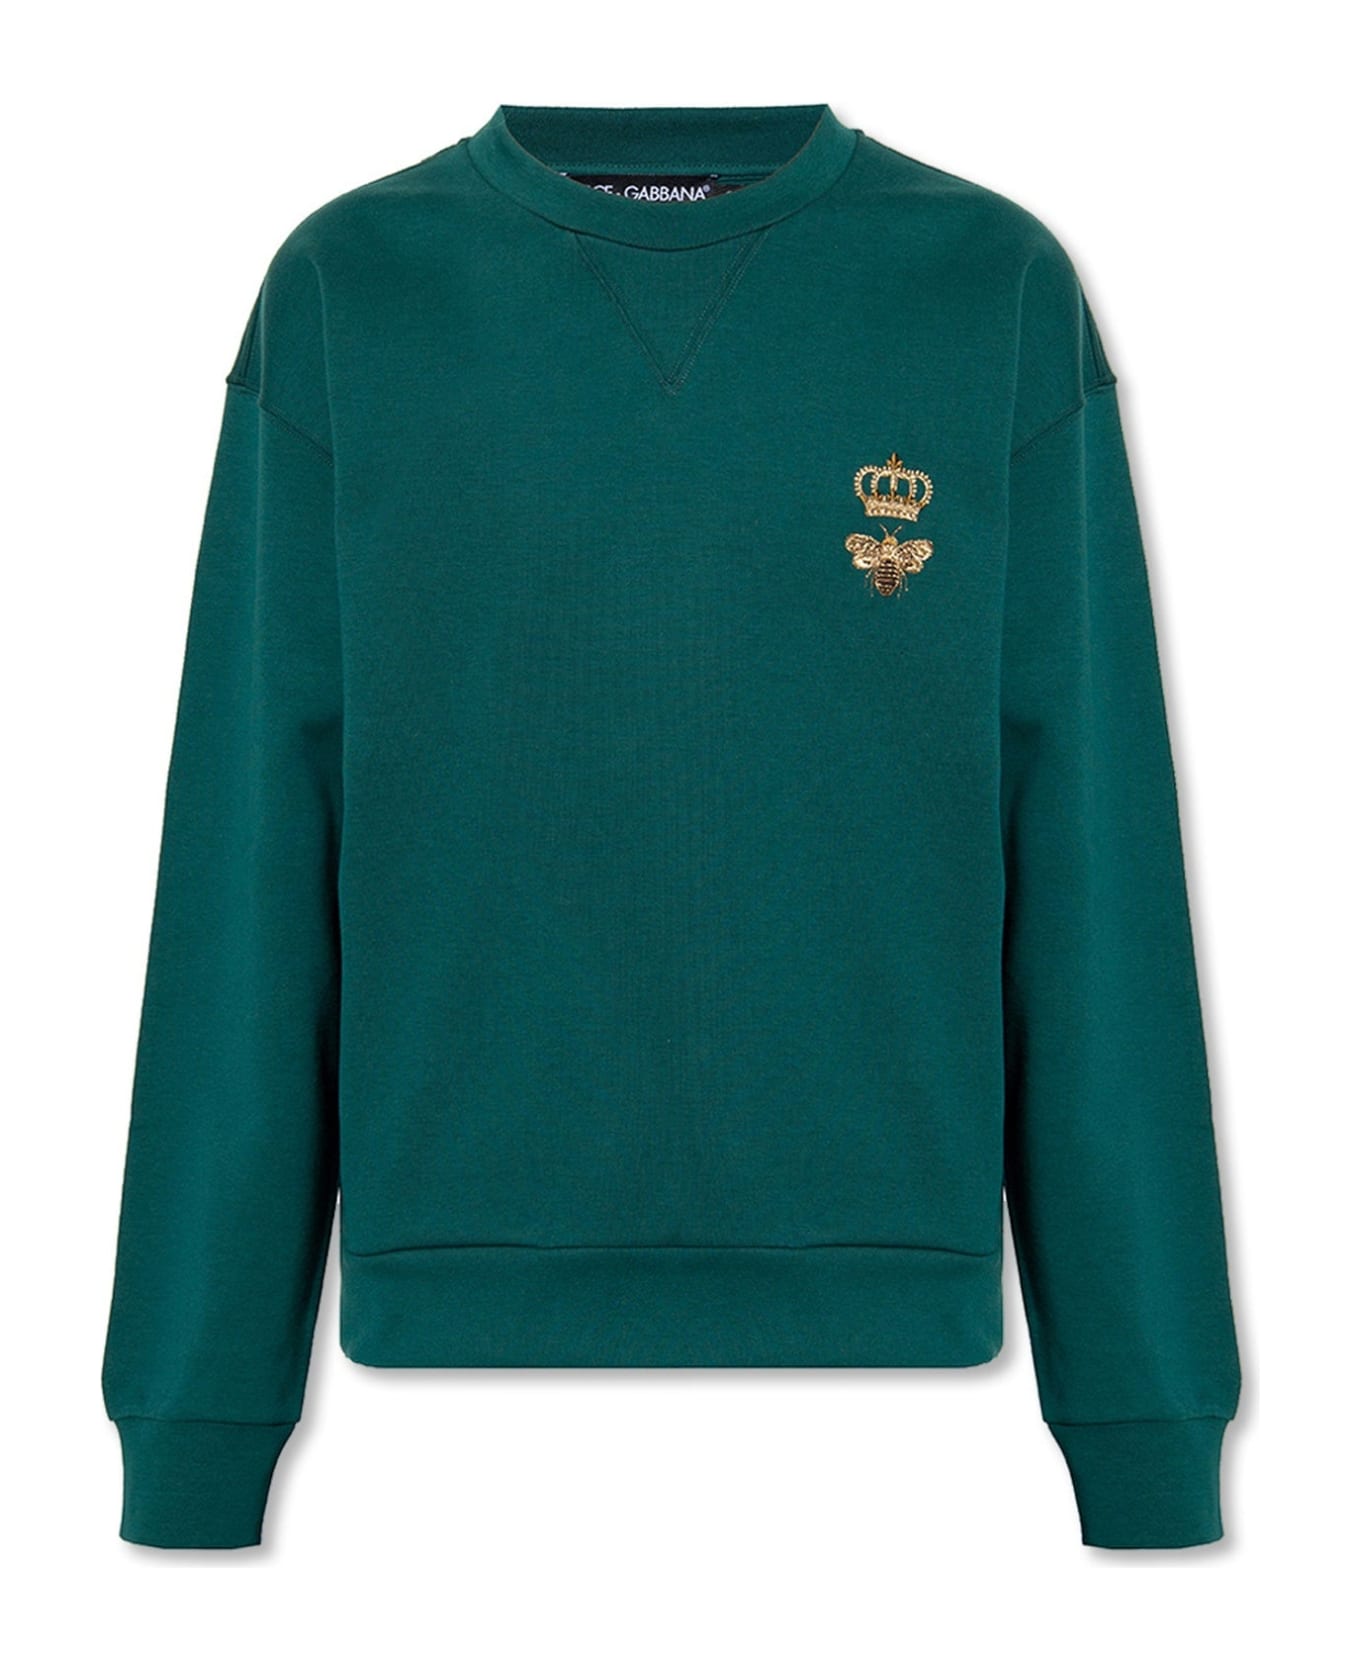 Dolce & Gabbana Cotton Sweatshirt - Green